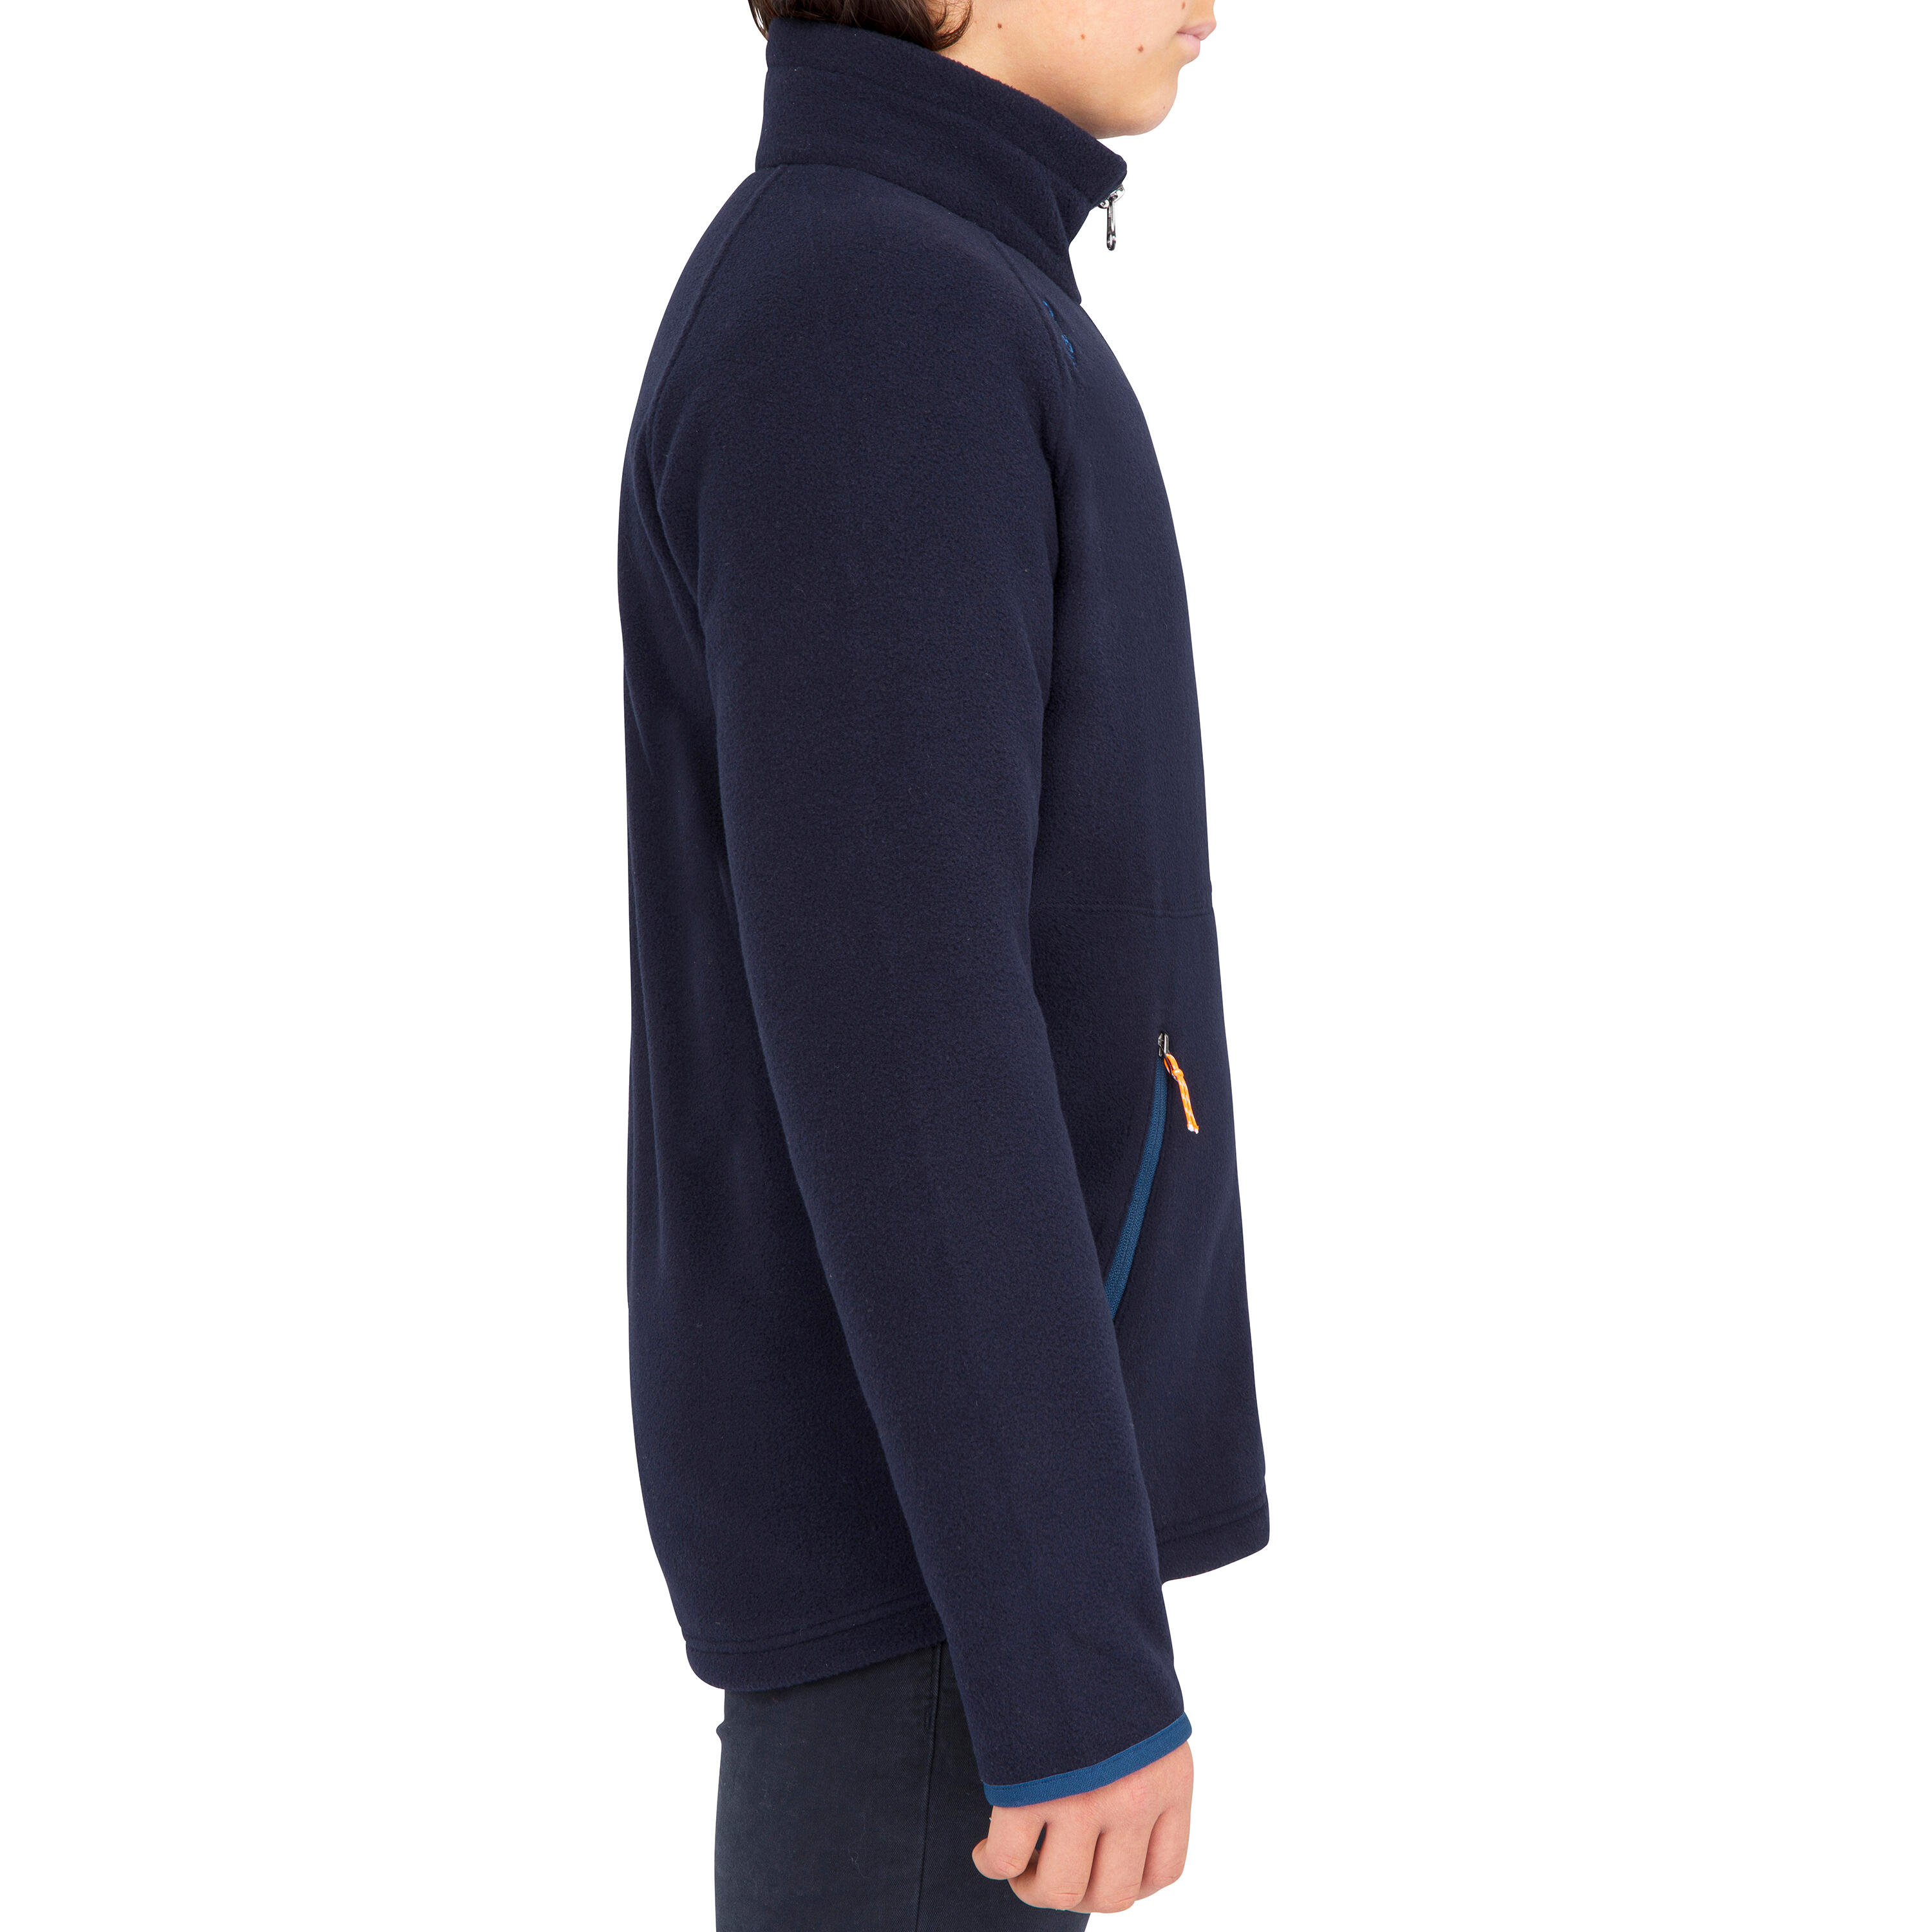 Kids warm fleece sailing jacket 100 - Navy blue 3/9